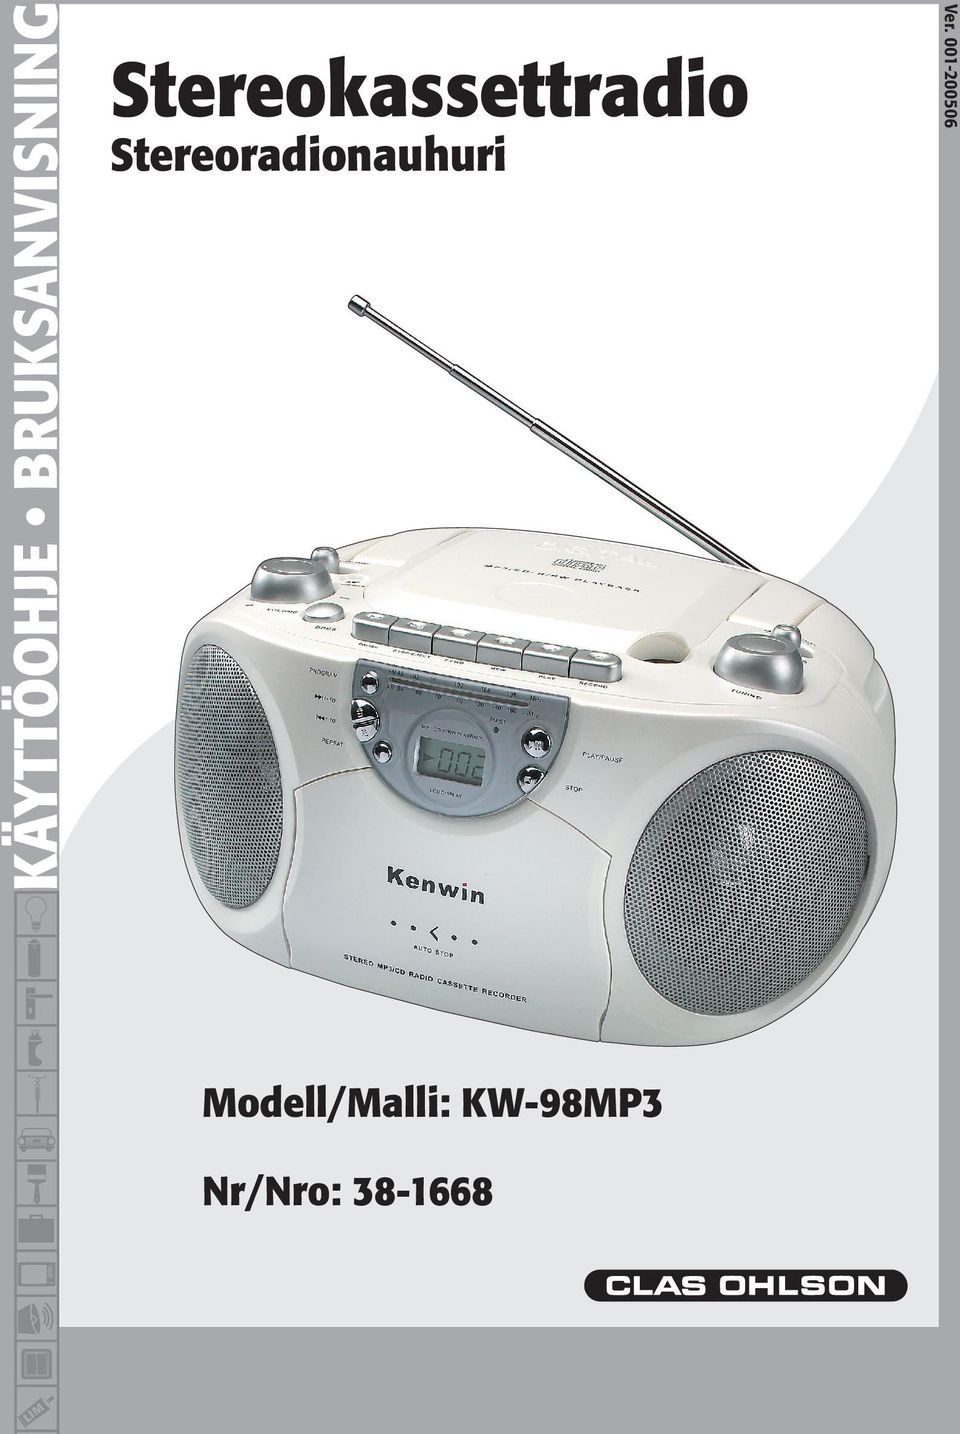 Modell/Malli: KW-98MP3